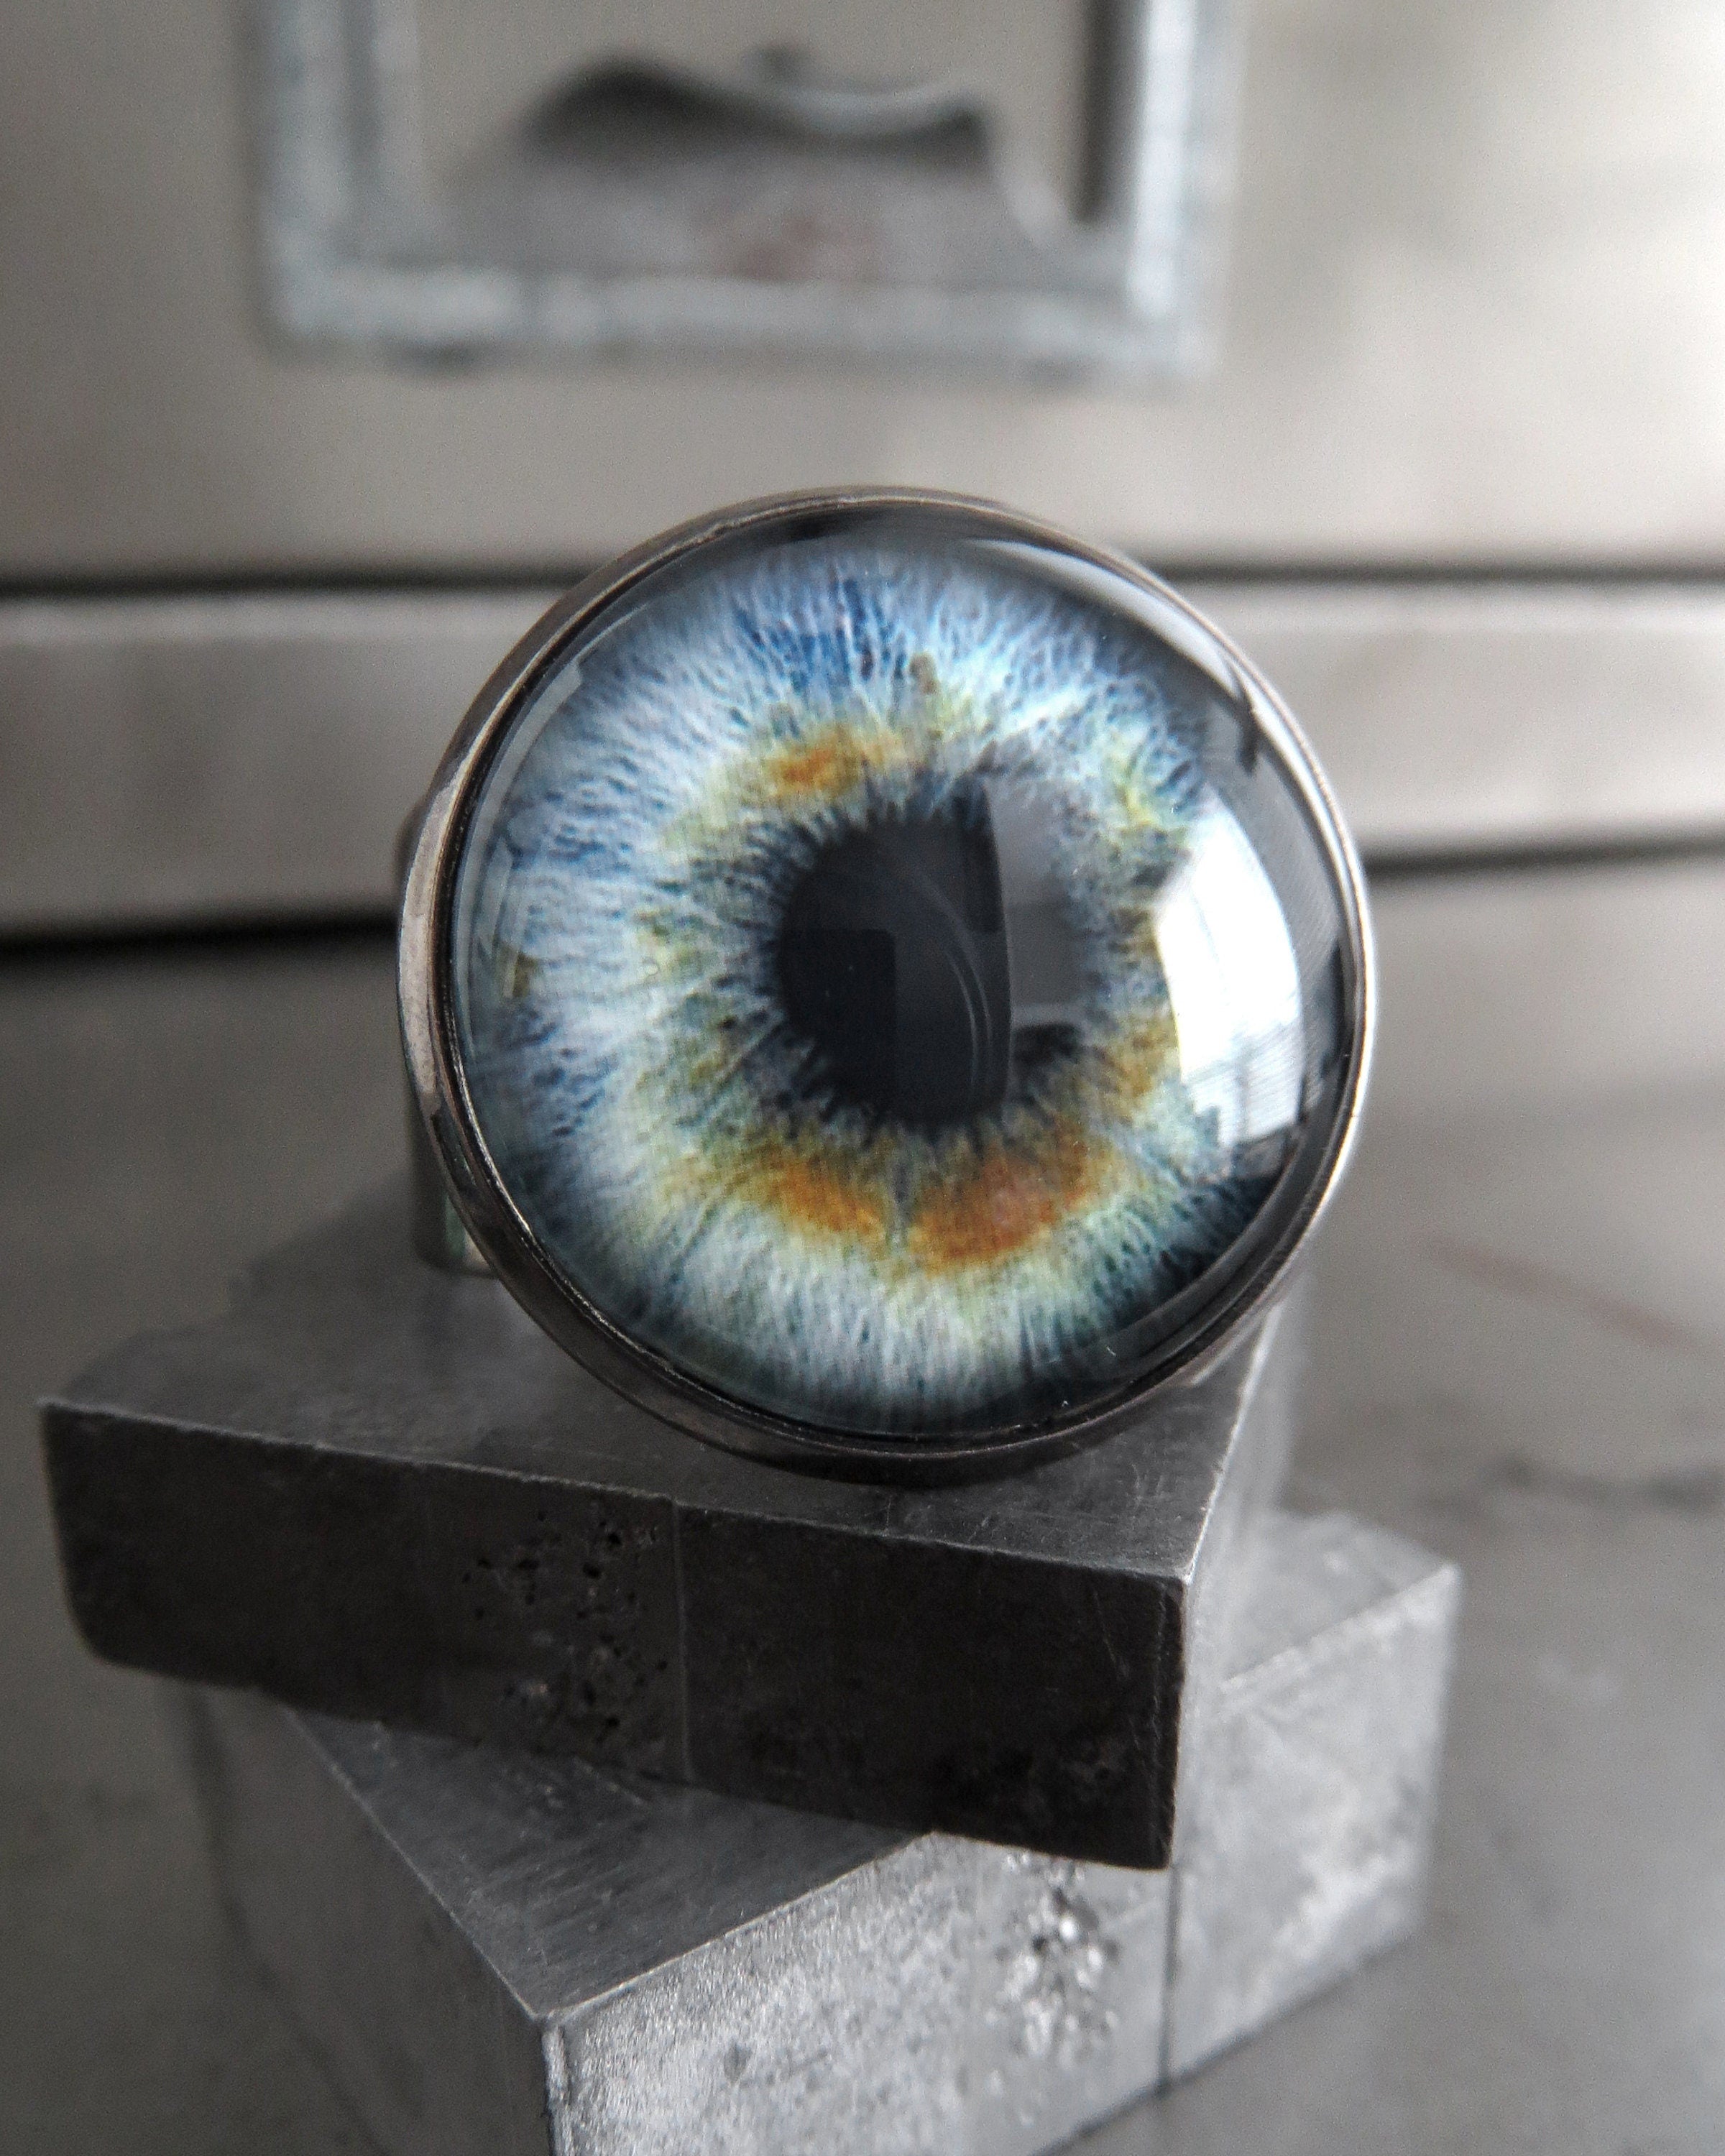 Blue Eyeball Ring w Brown Flecks - 2 Sizes - Realistic Eye Ring, Evil Eye Ring, Adjustable Black Ring Band - Goth Halloween Gift for Teen